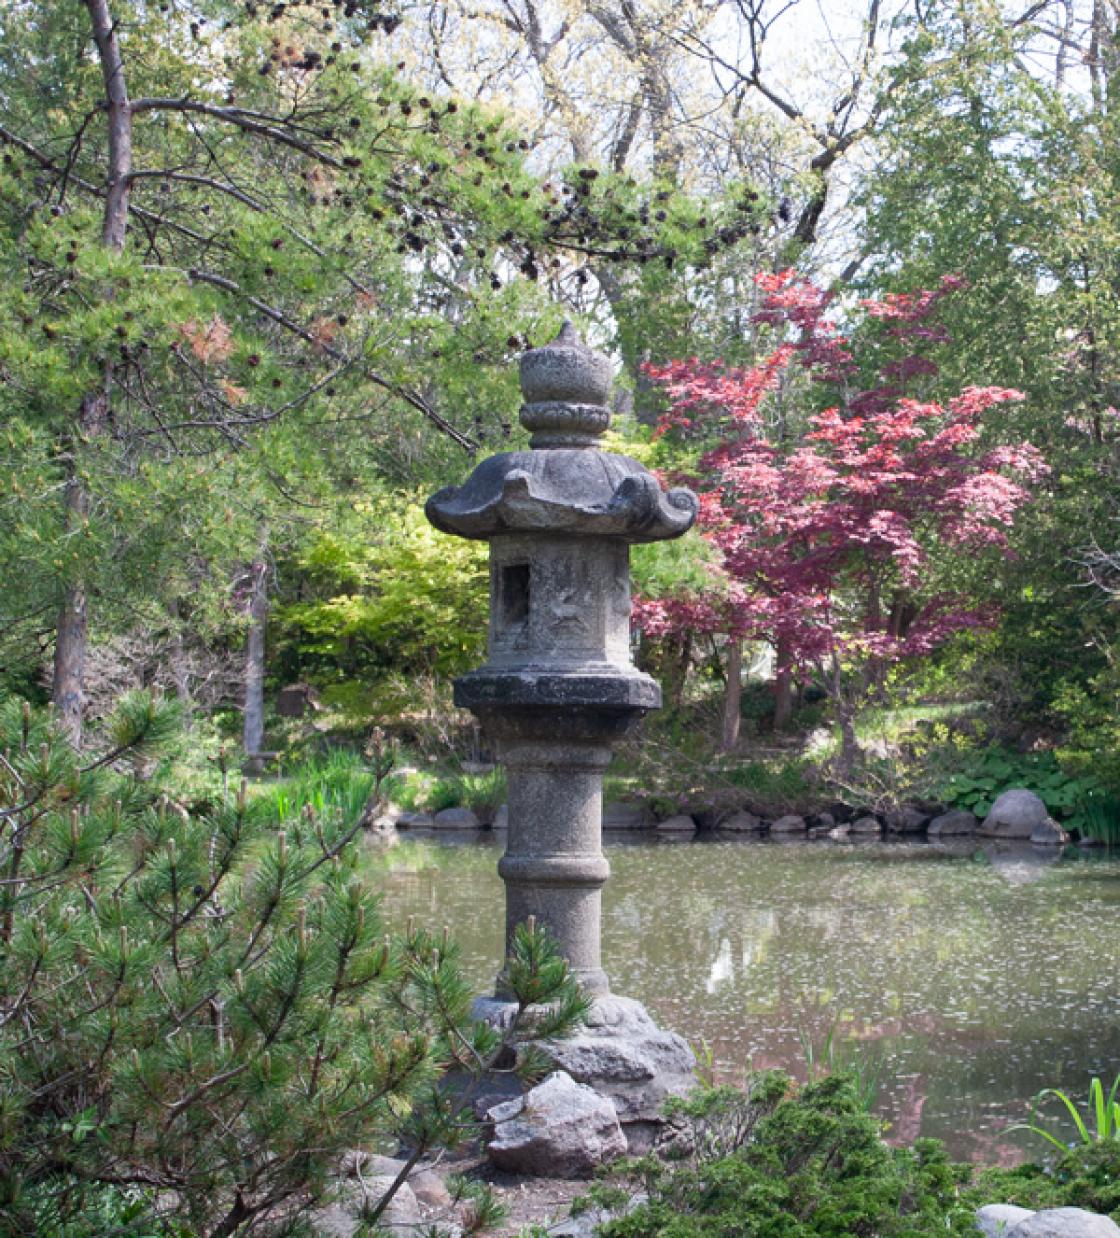 Photograph of the Kasuga Lantern in Cranbrook's Japanese Garden.